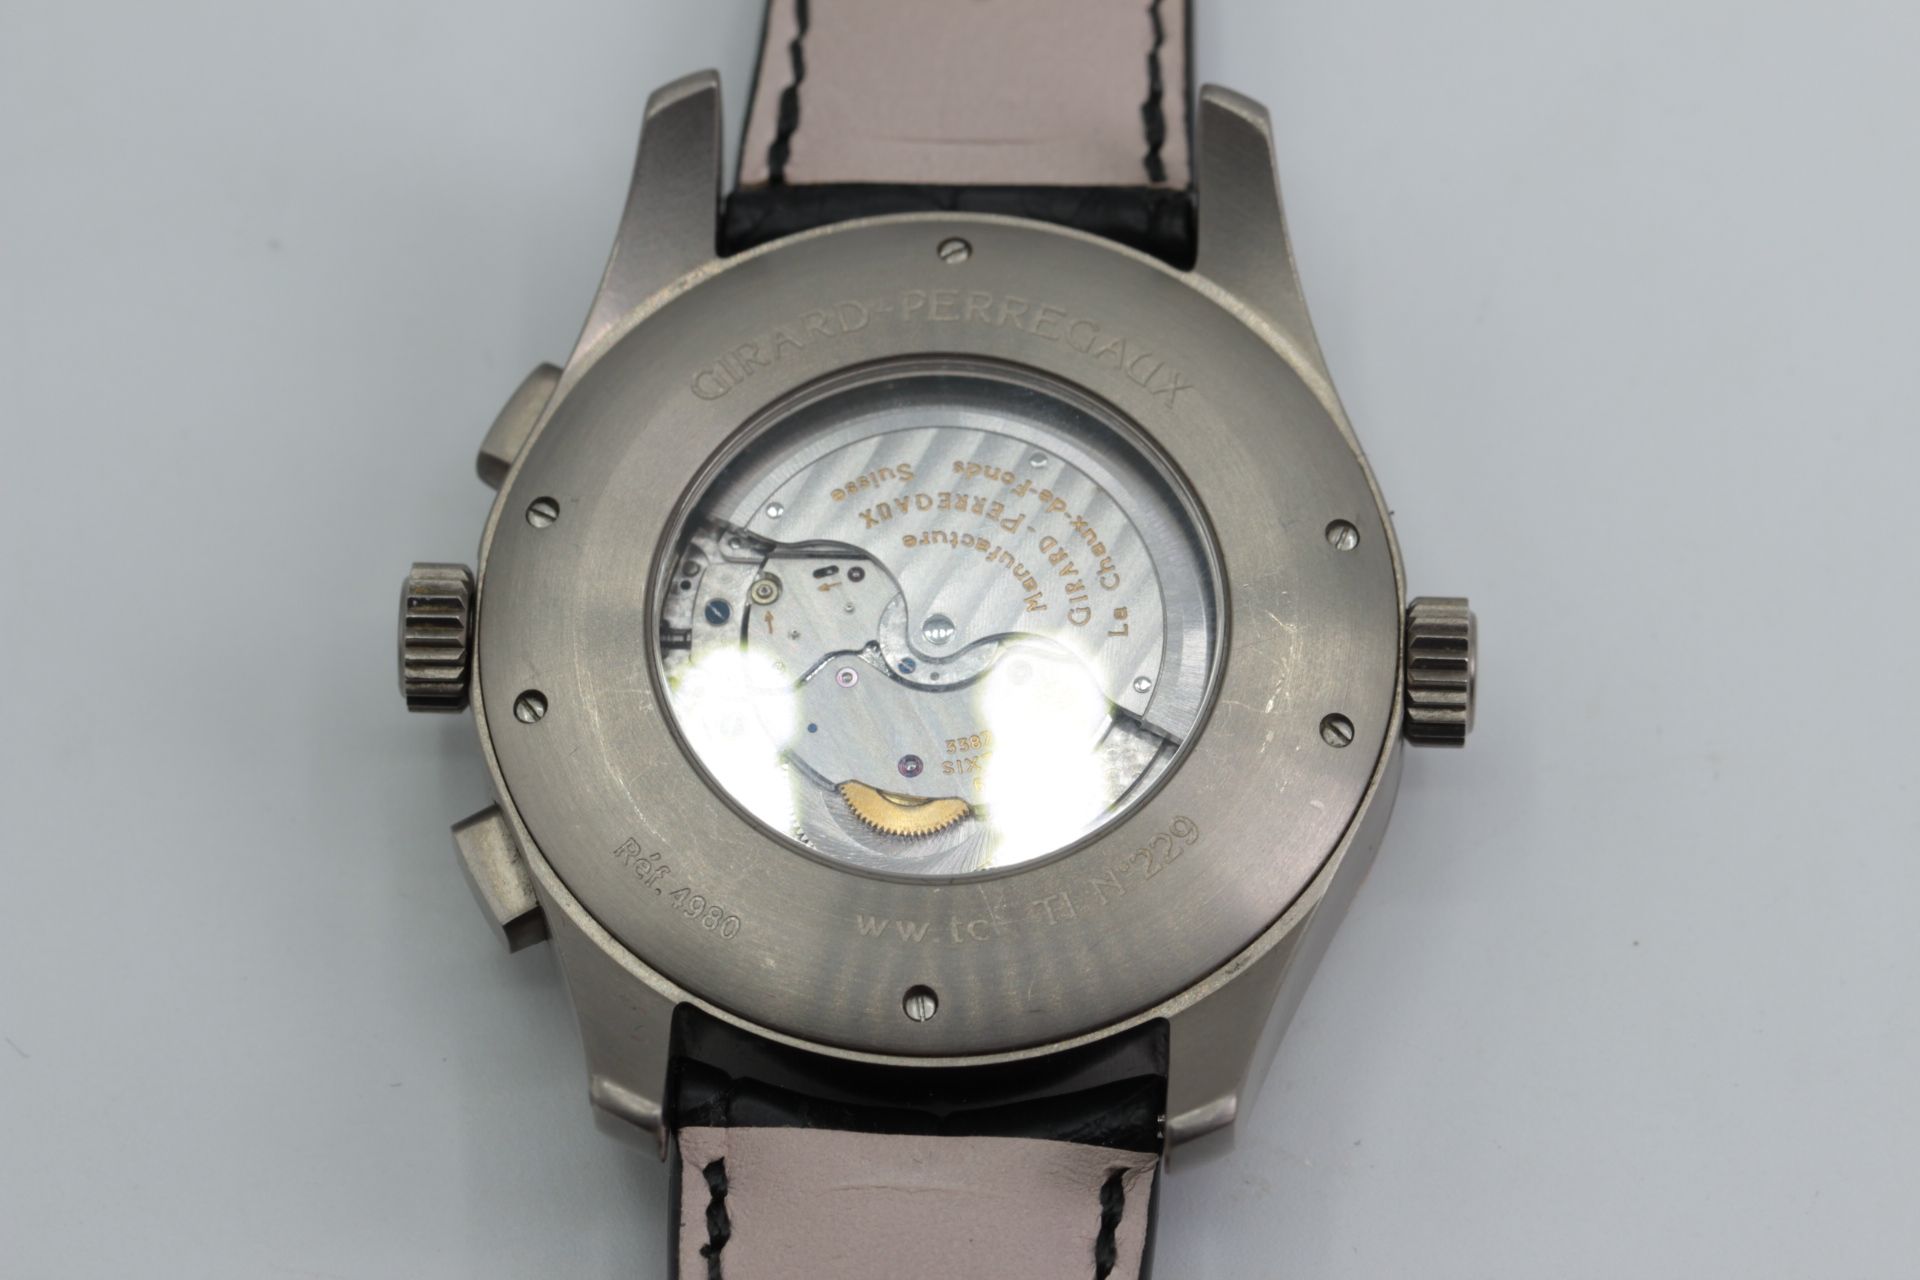 Girard Perrgeaux Wrist Watch WWTC Chronograph Titan For Men - Image 3 of 8